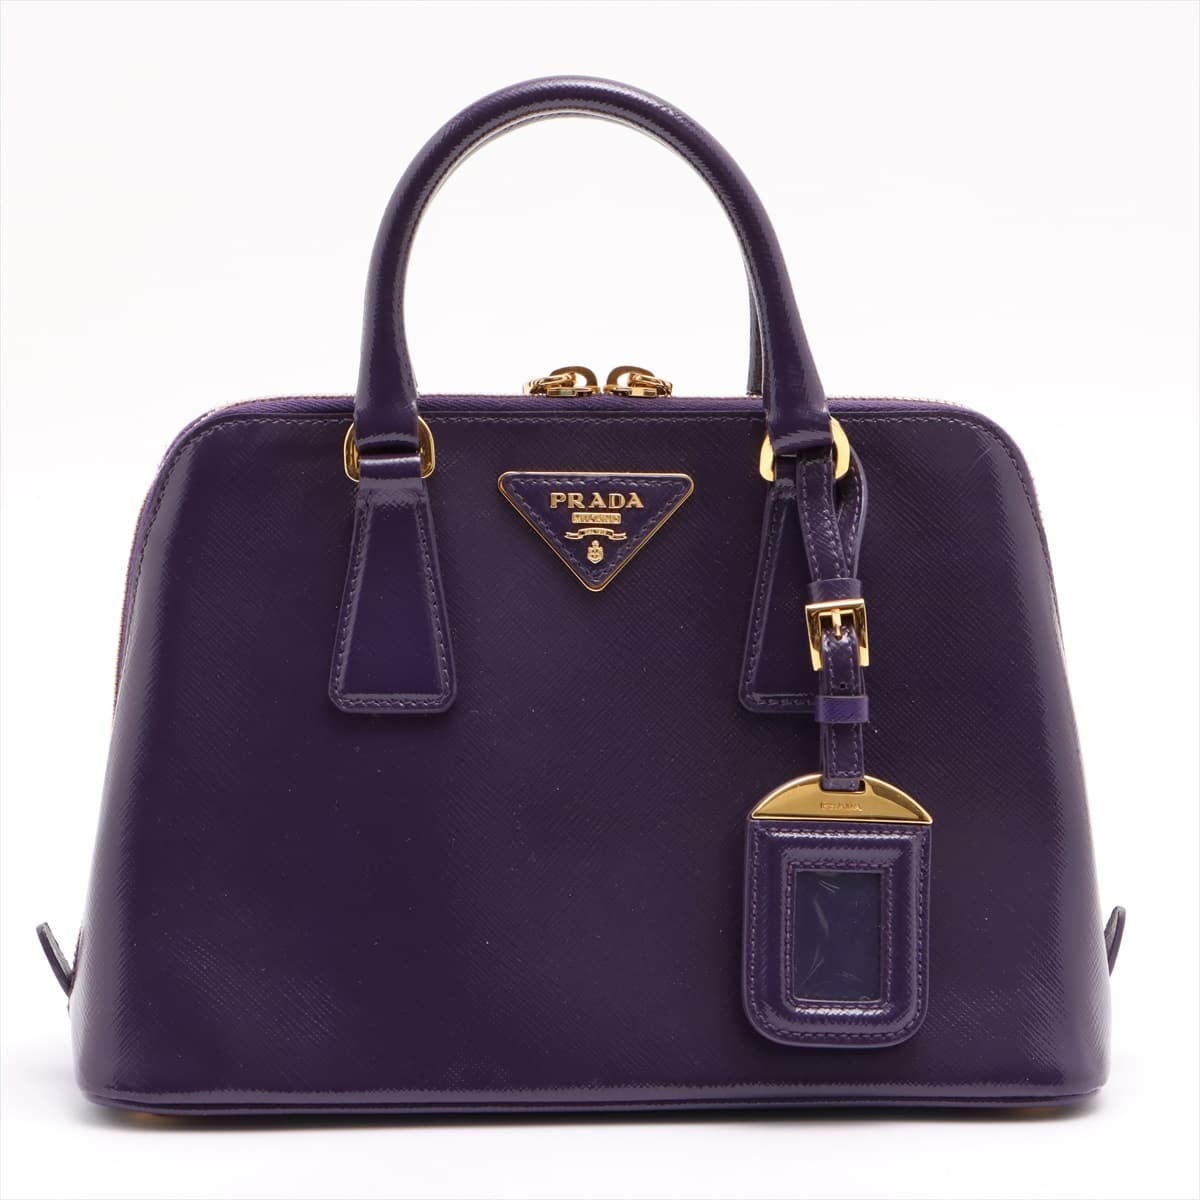 Prada Saffiano Vernice Patent leather 2way shoulder bag Purple